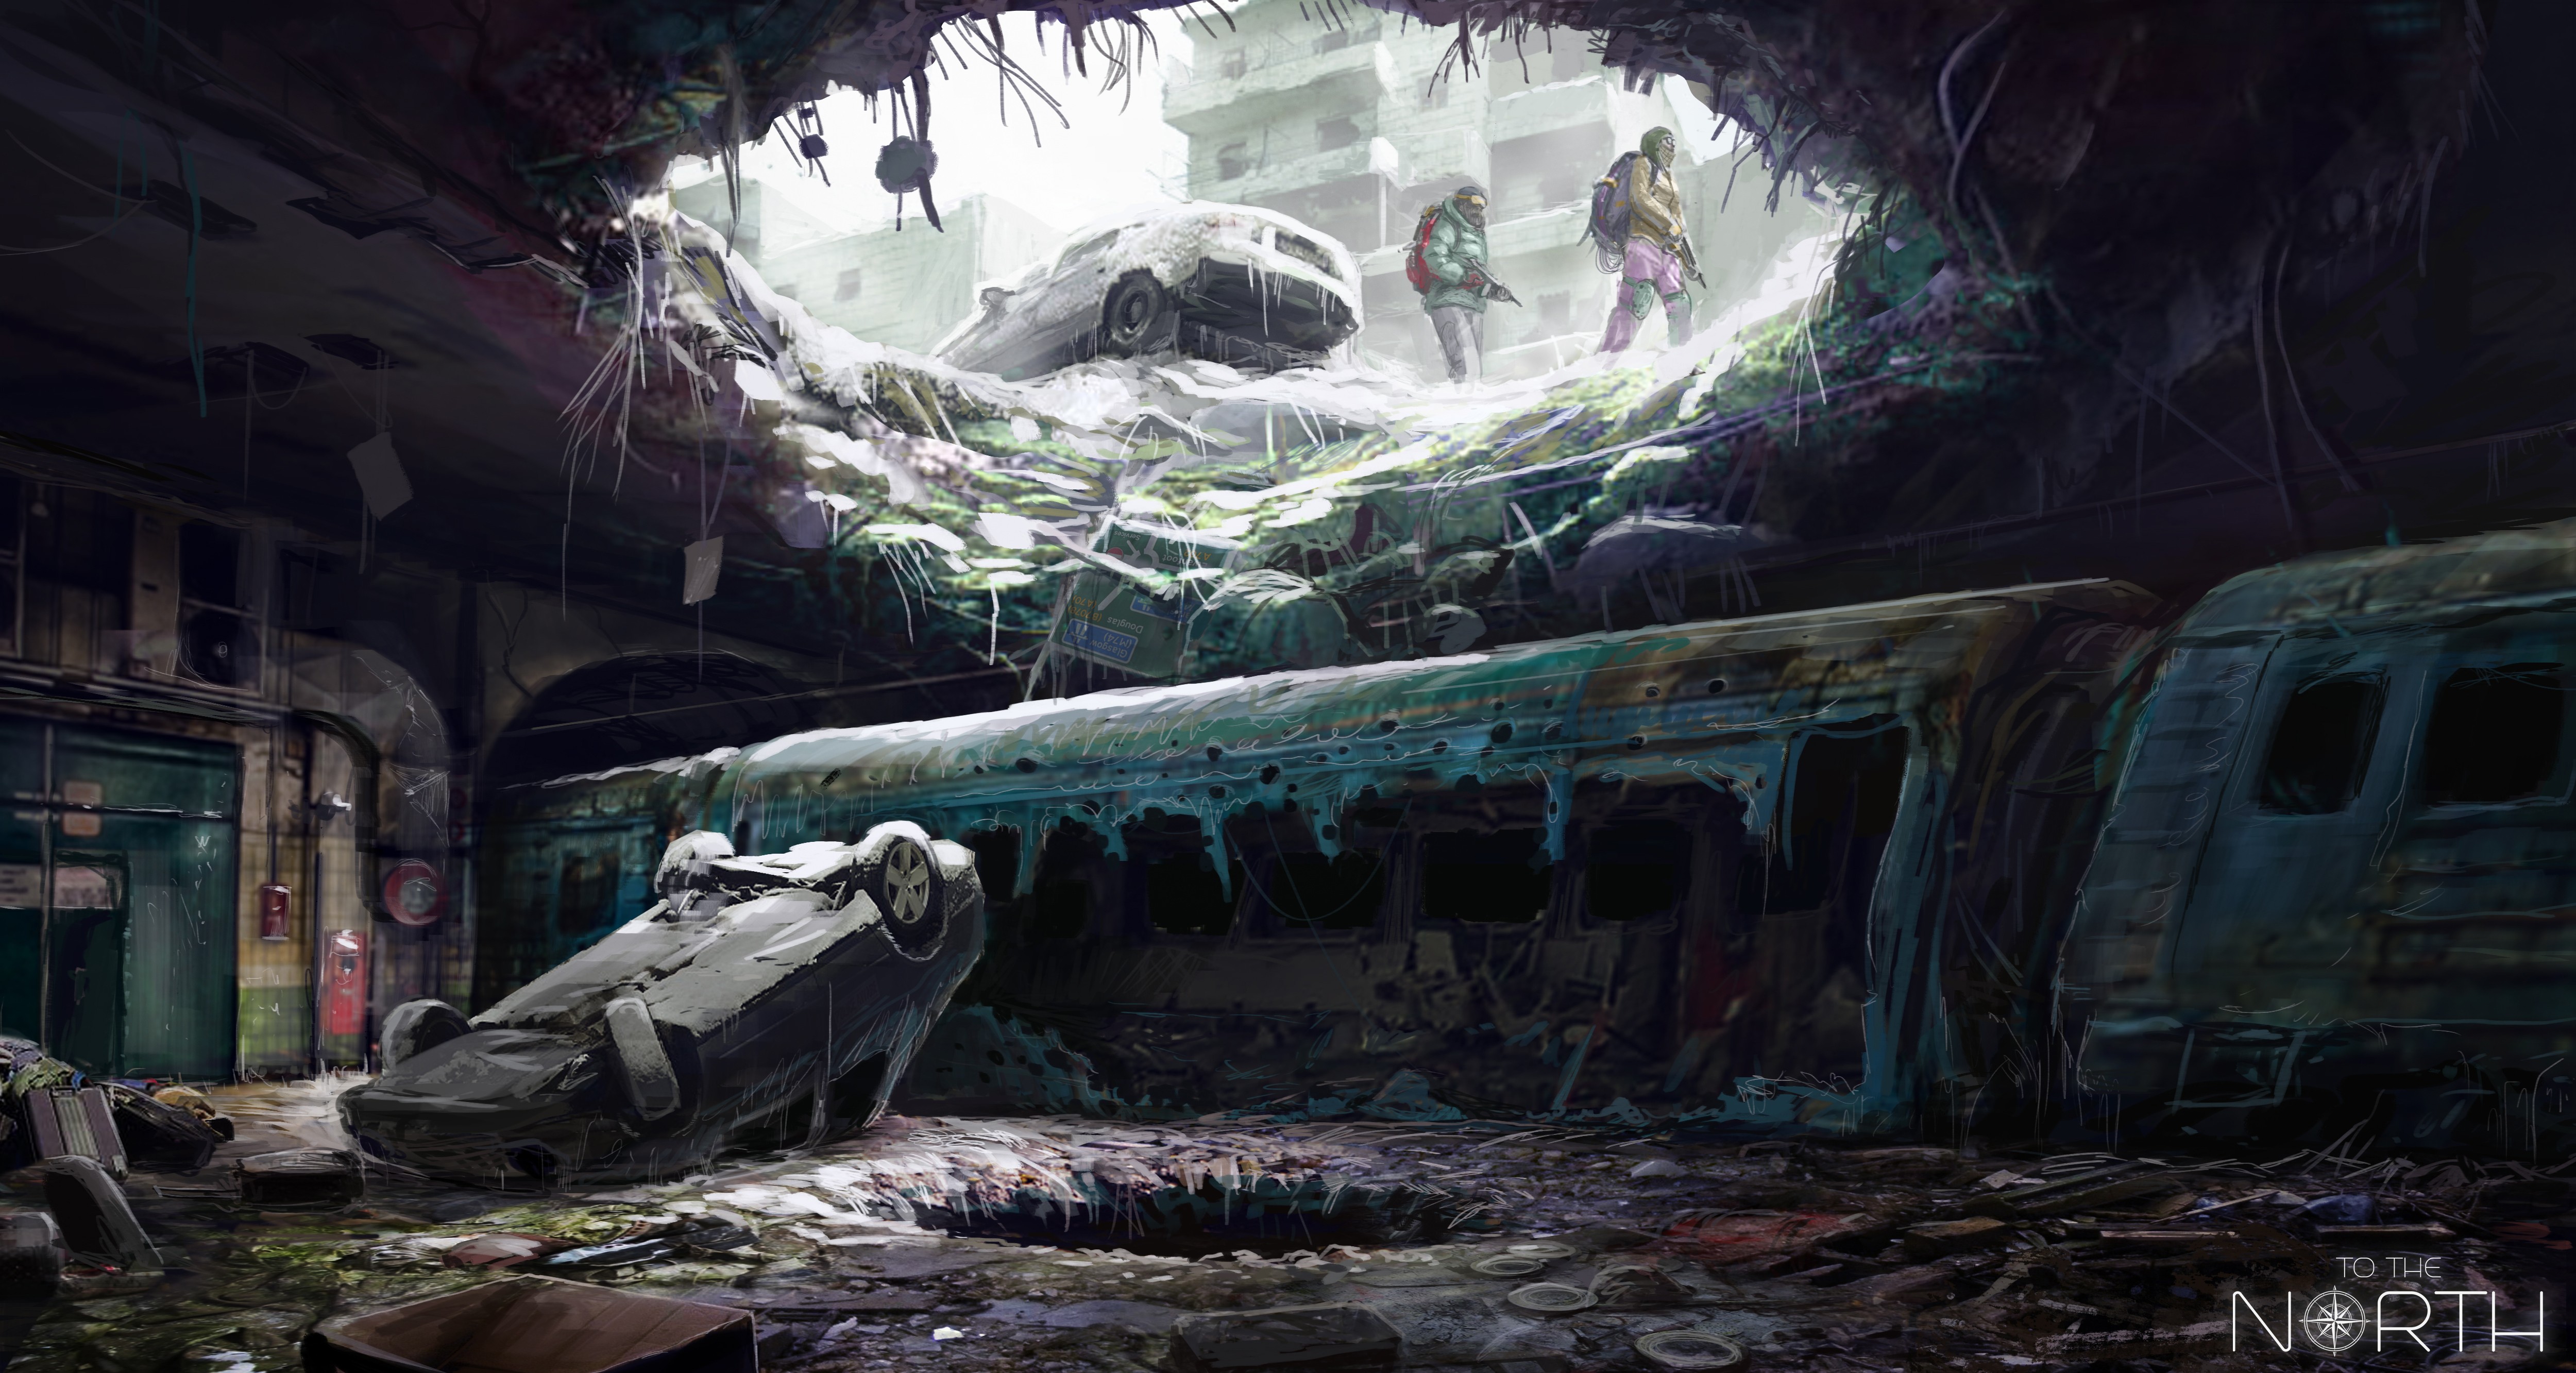 General 5000x2665 apocalyptic futuristic artwork ruins wreck train car city underground